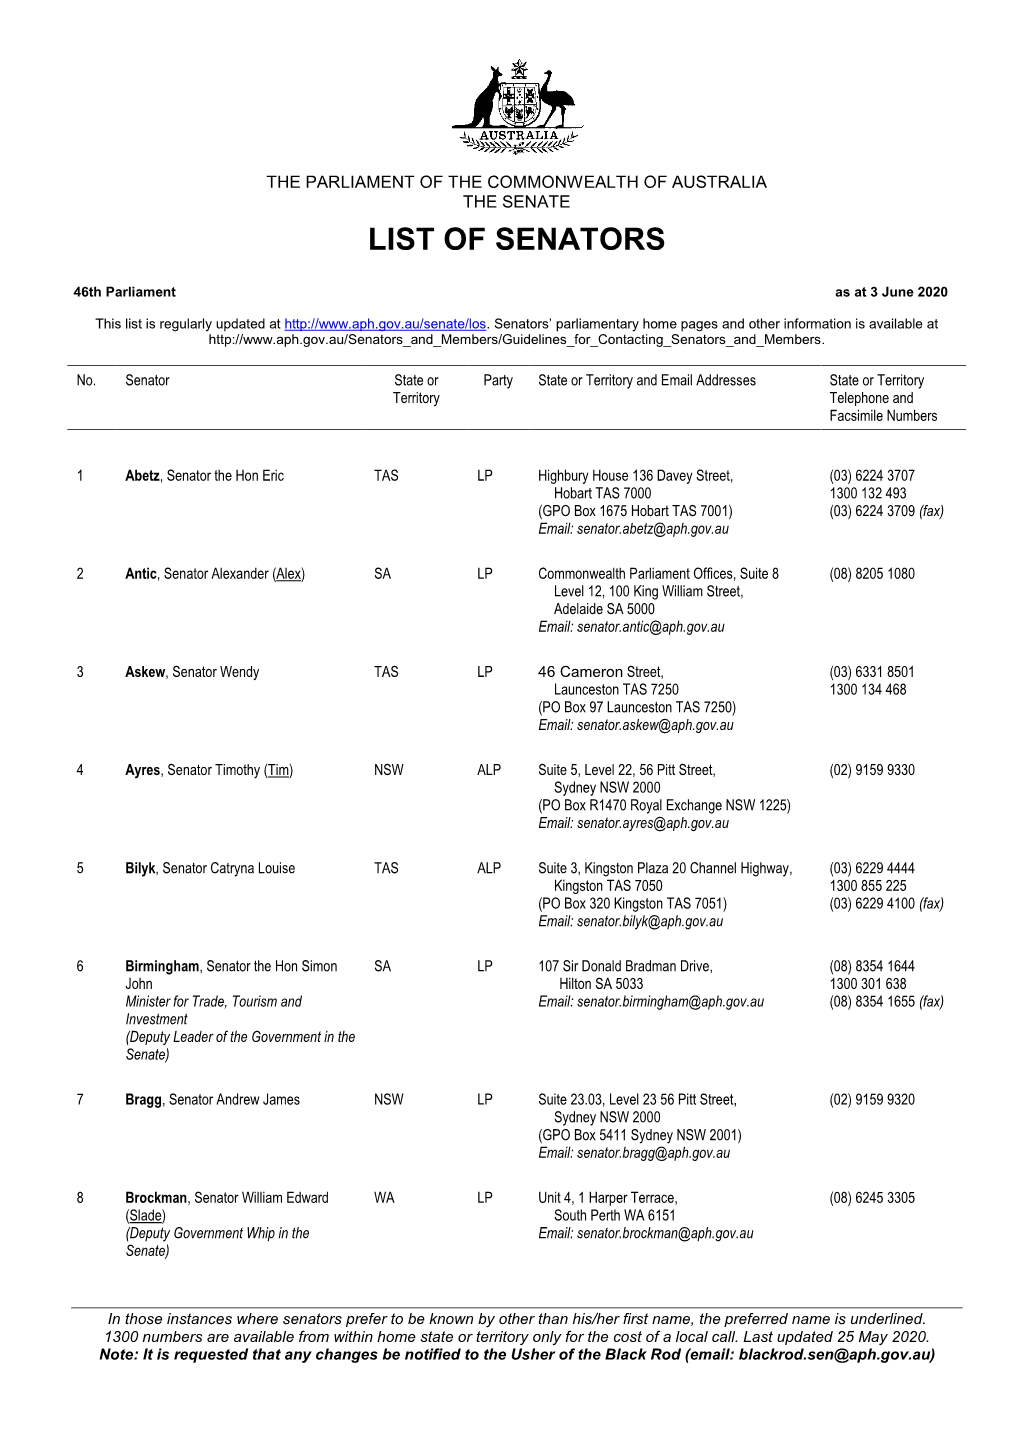 List of Senators